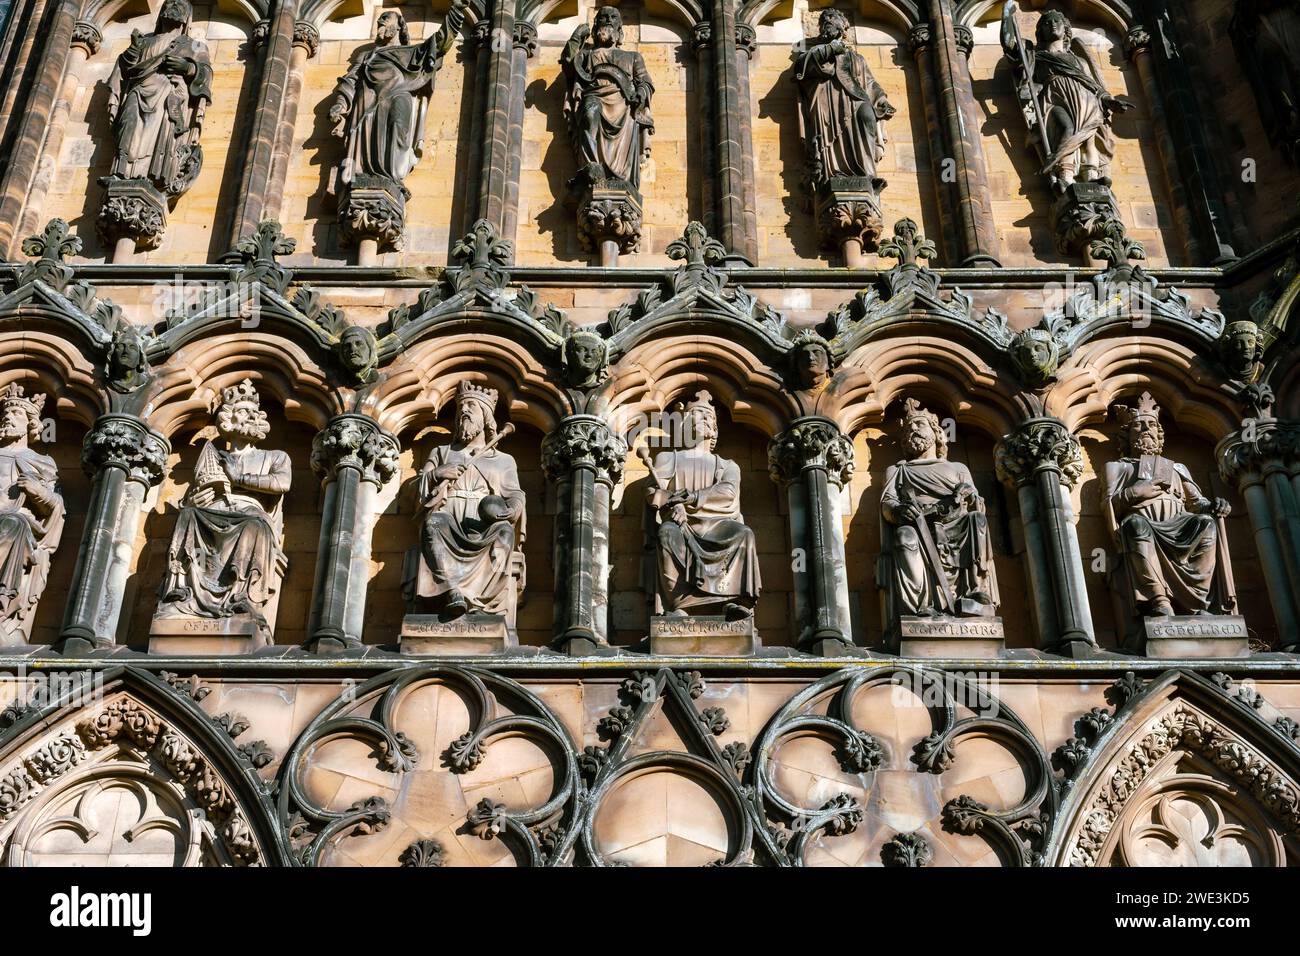 Lichfield Cathedral Shaun Fellows / Alamy Stock Photo